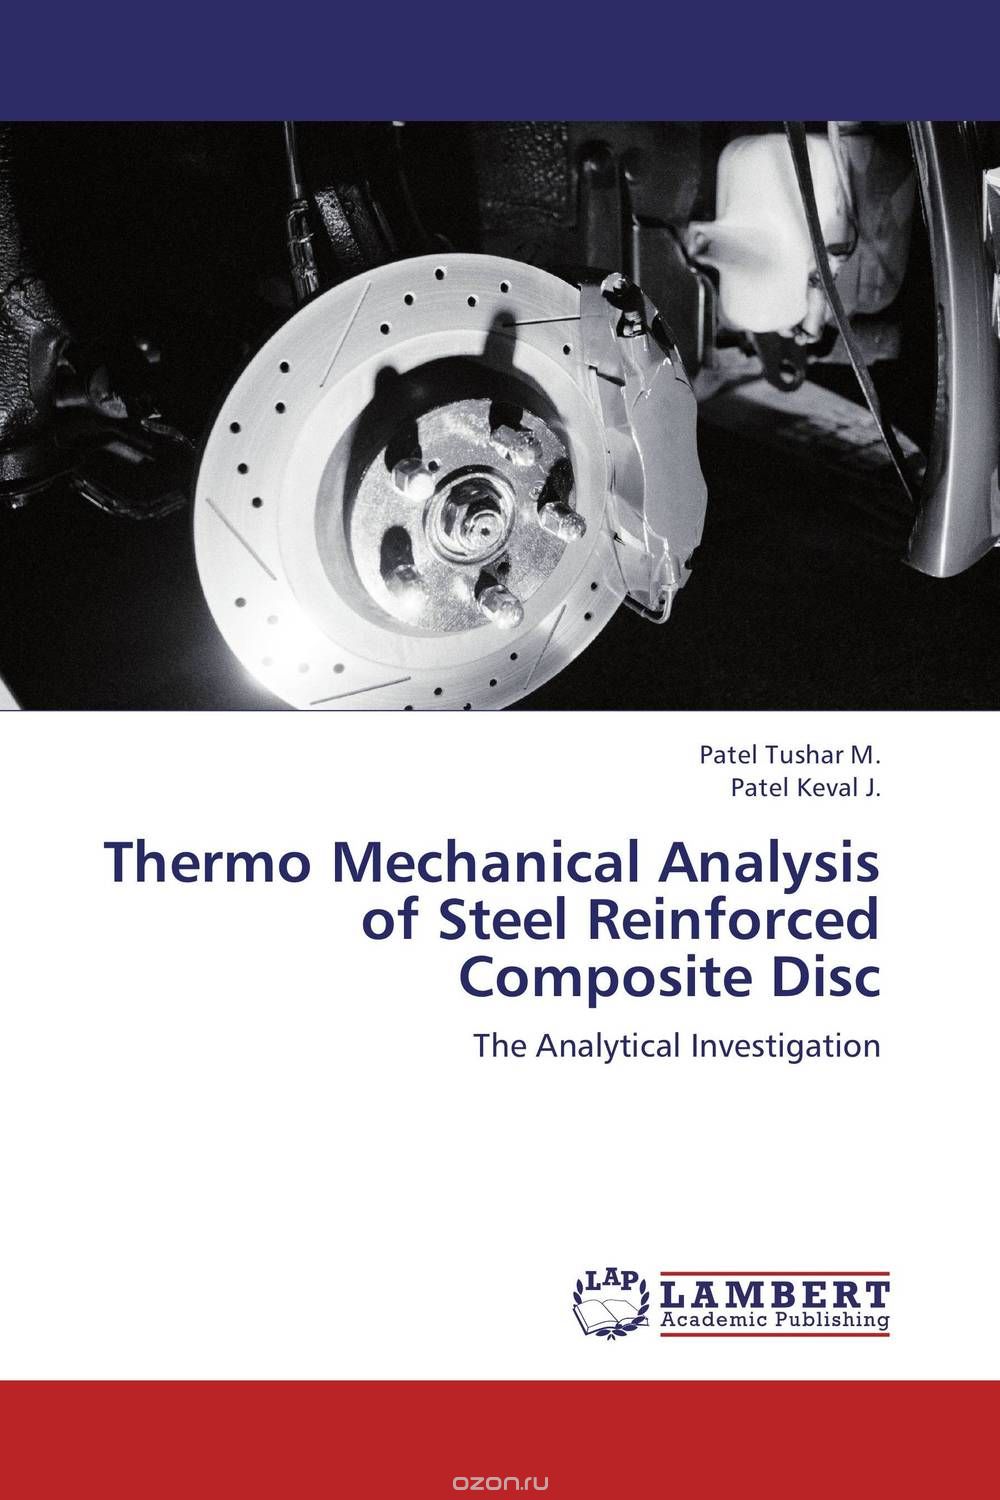 Скачать книгу "Thermo Mechanical Analysis of Steel Reinforced Composite Disc"